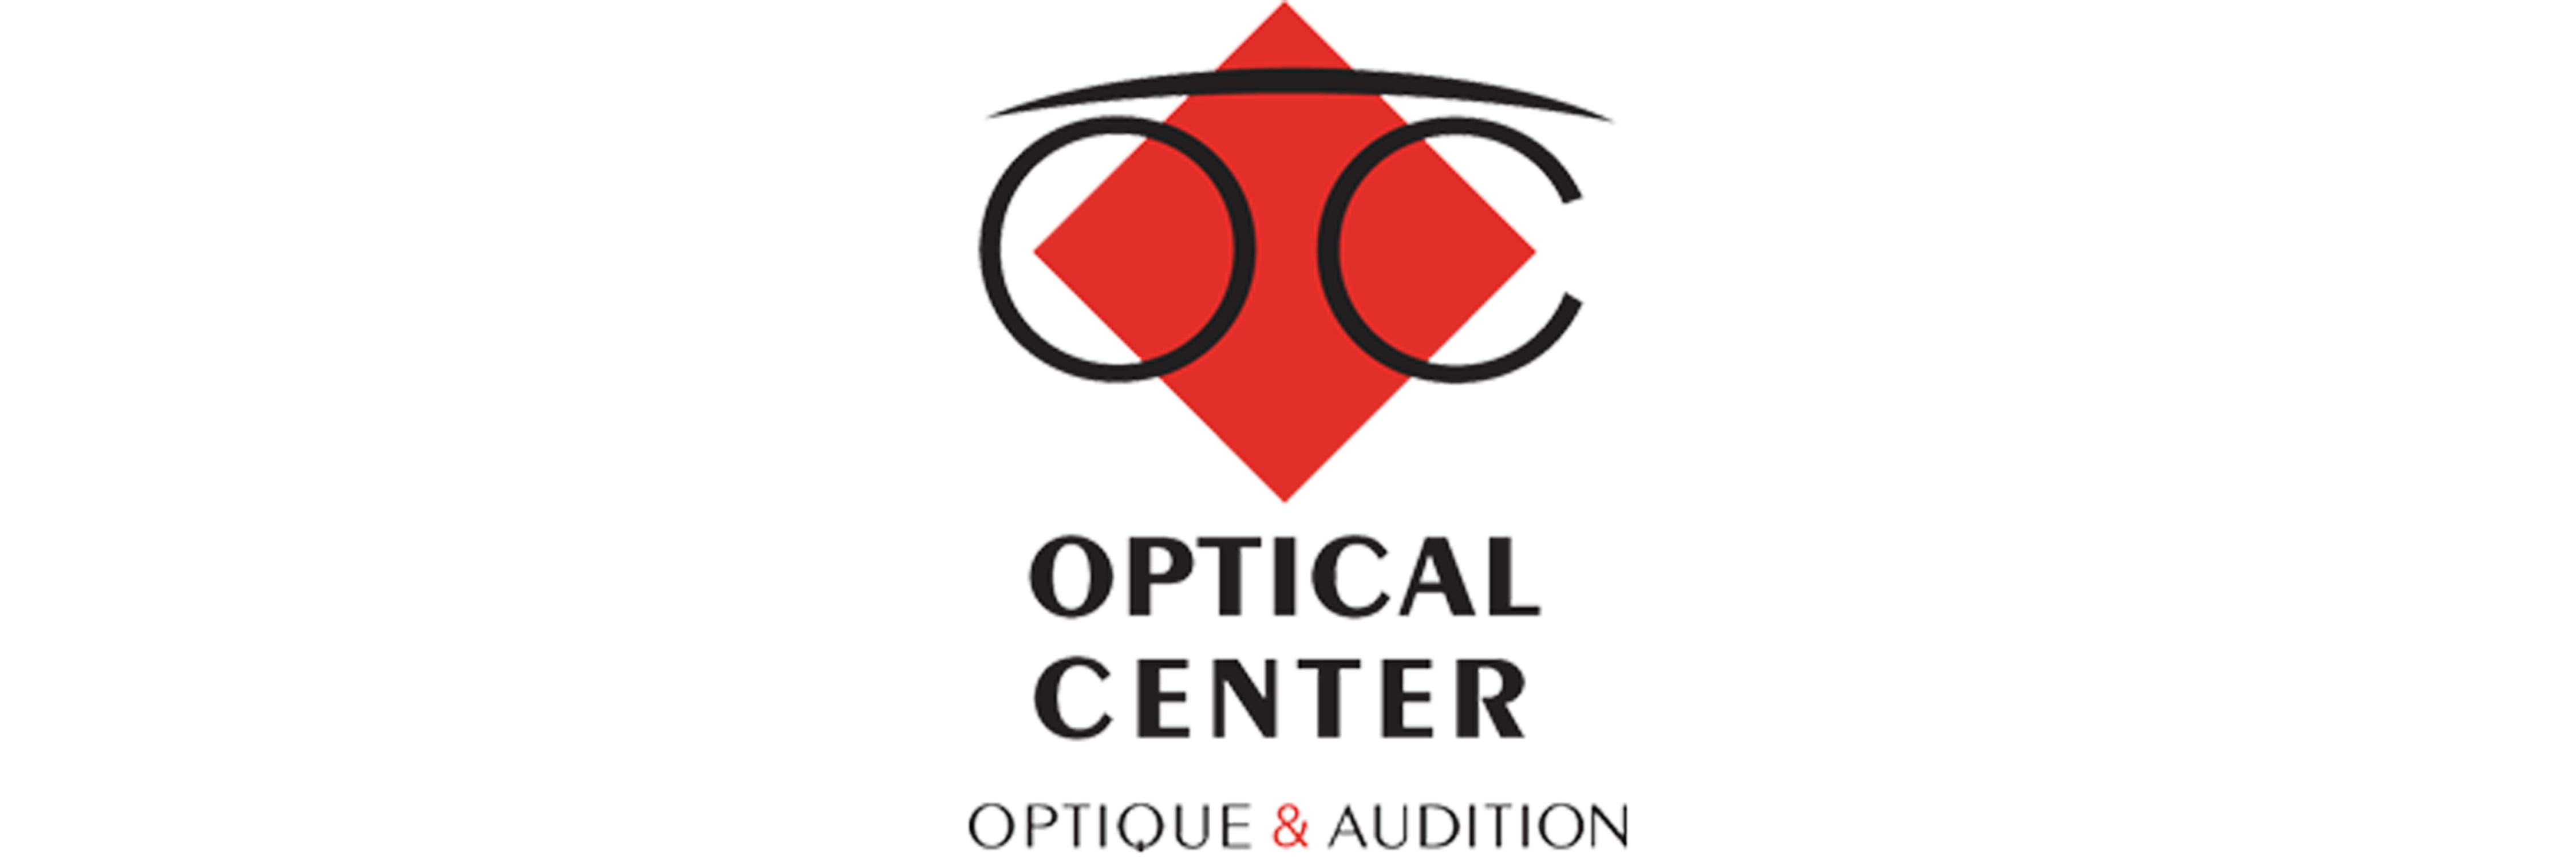 center optical